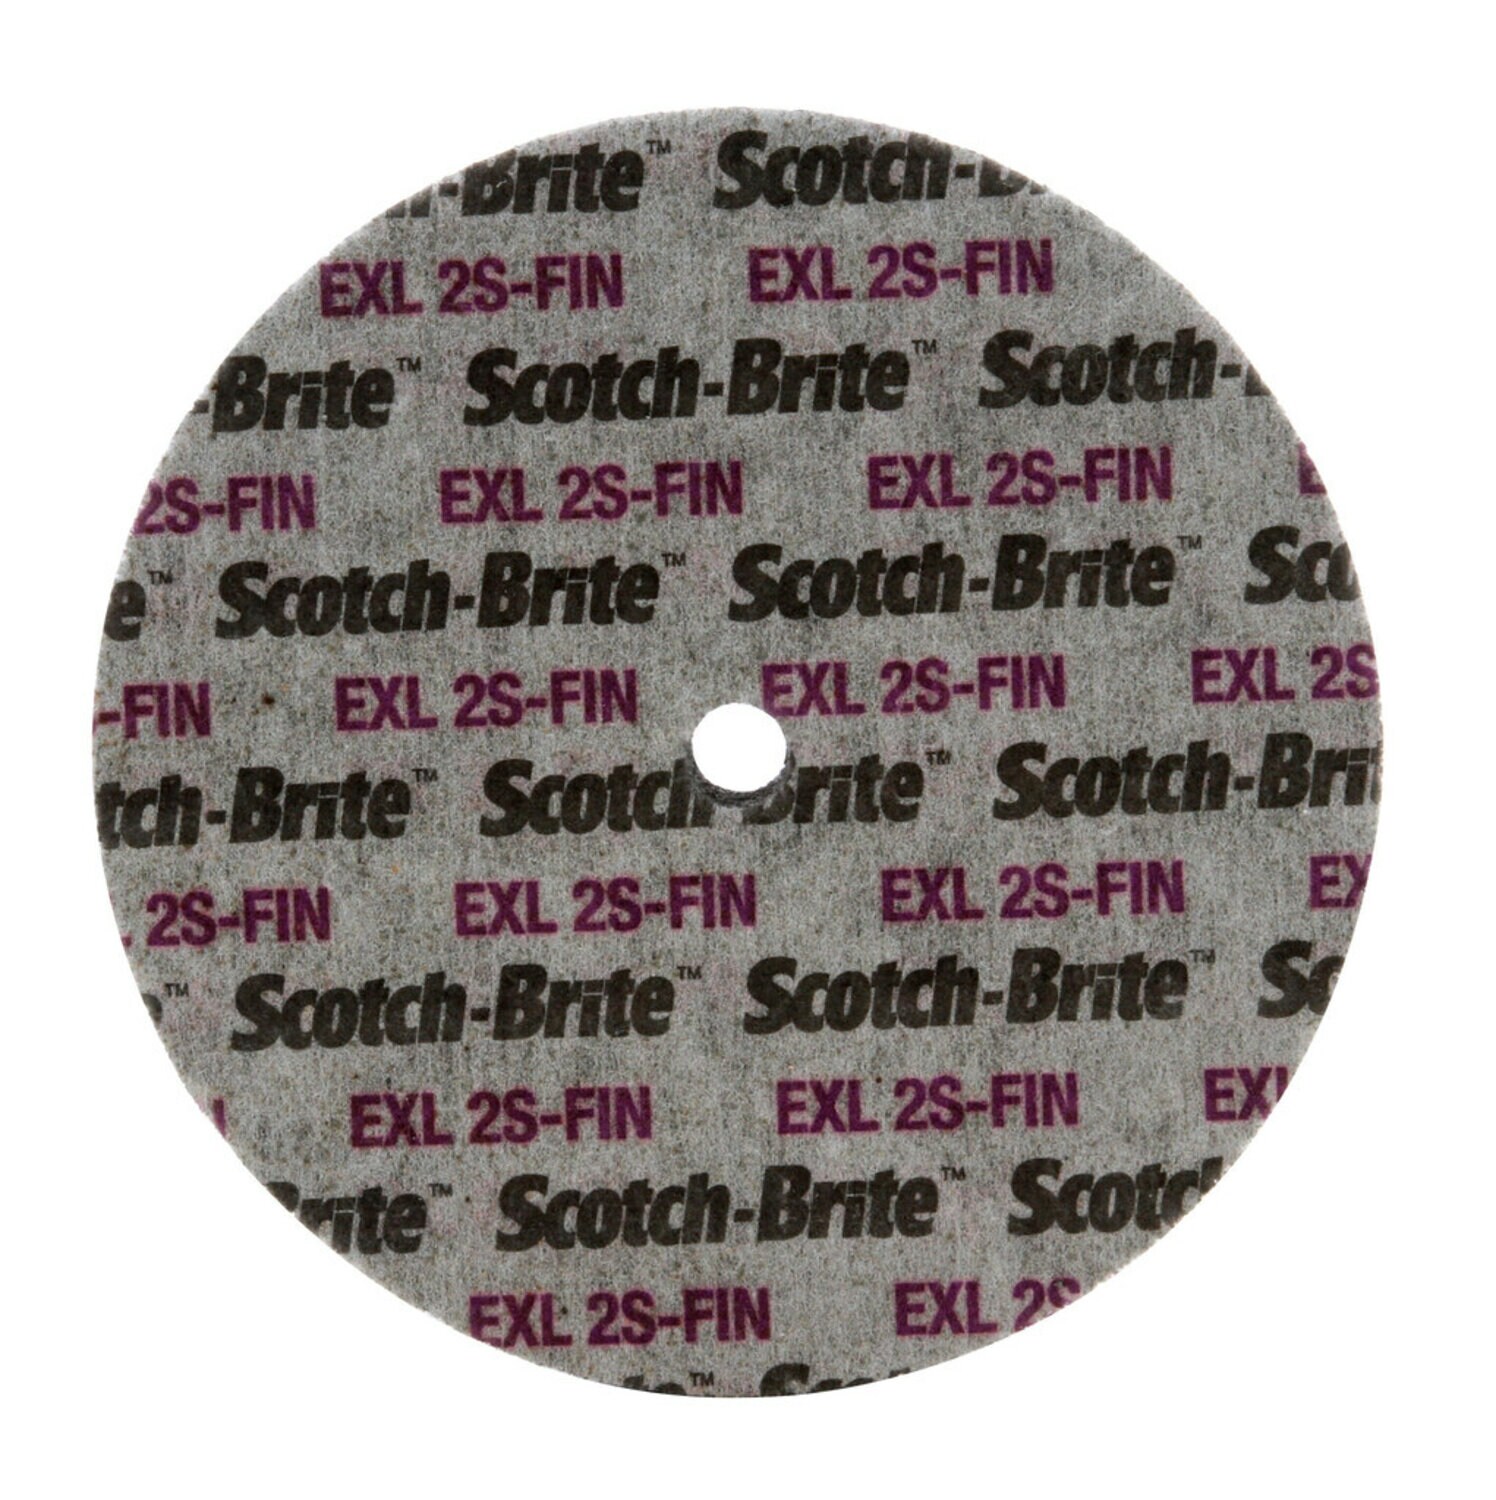 7010364573 - Scotch-Brite EXL Unitized Wheel, XL-UW, 2S Fine, 6 in x 1/4 in x 5/8
in, 8 ea/Case